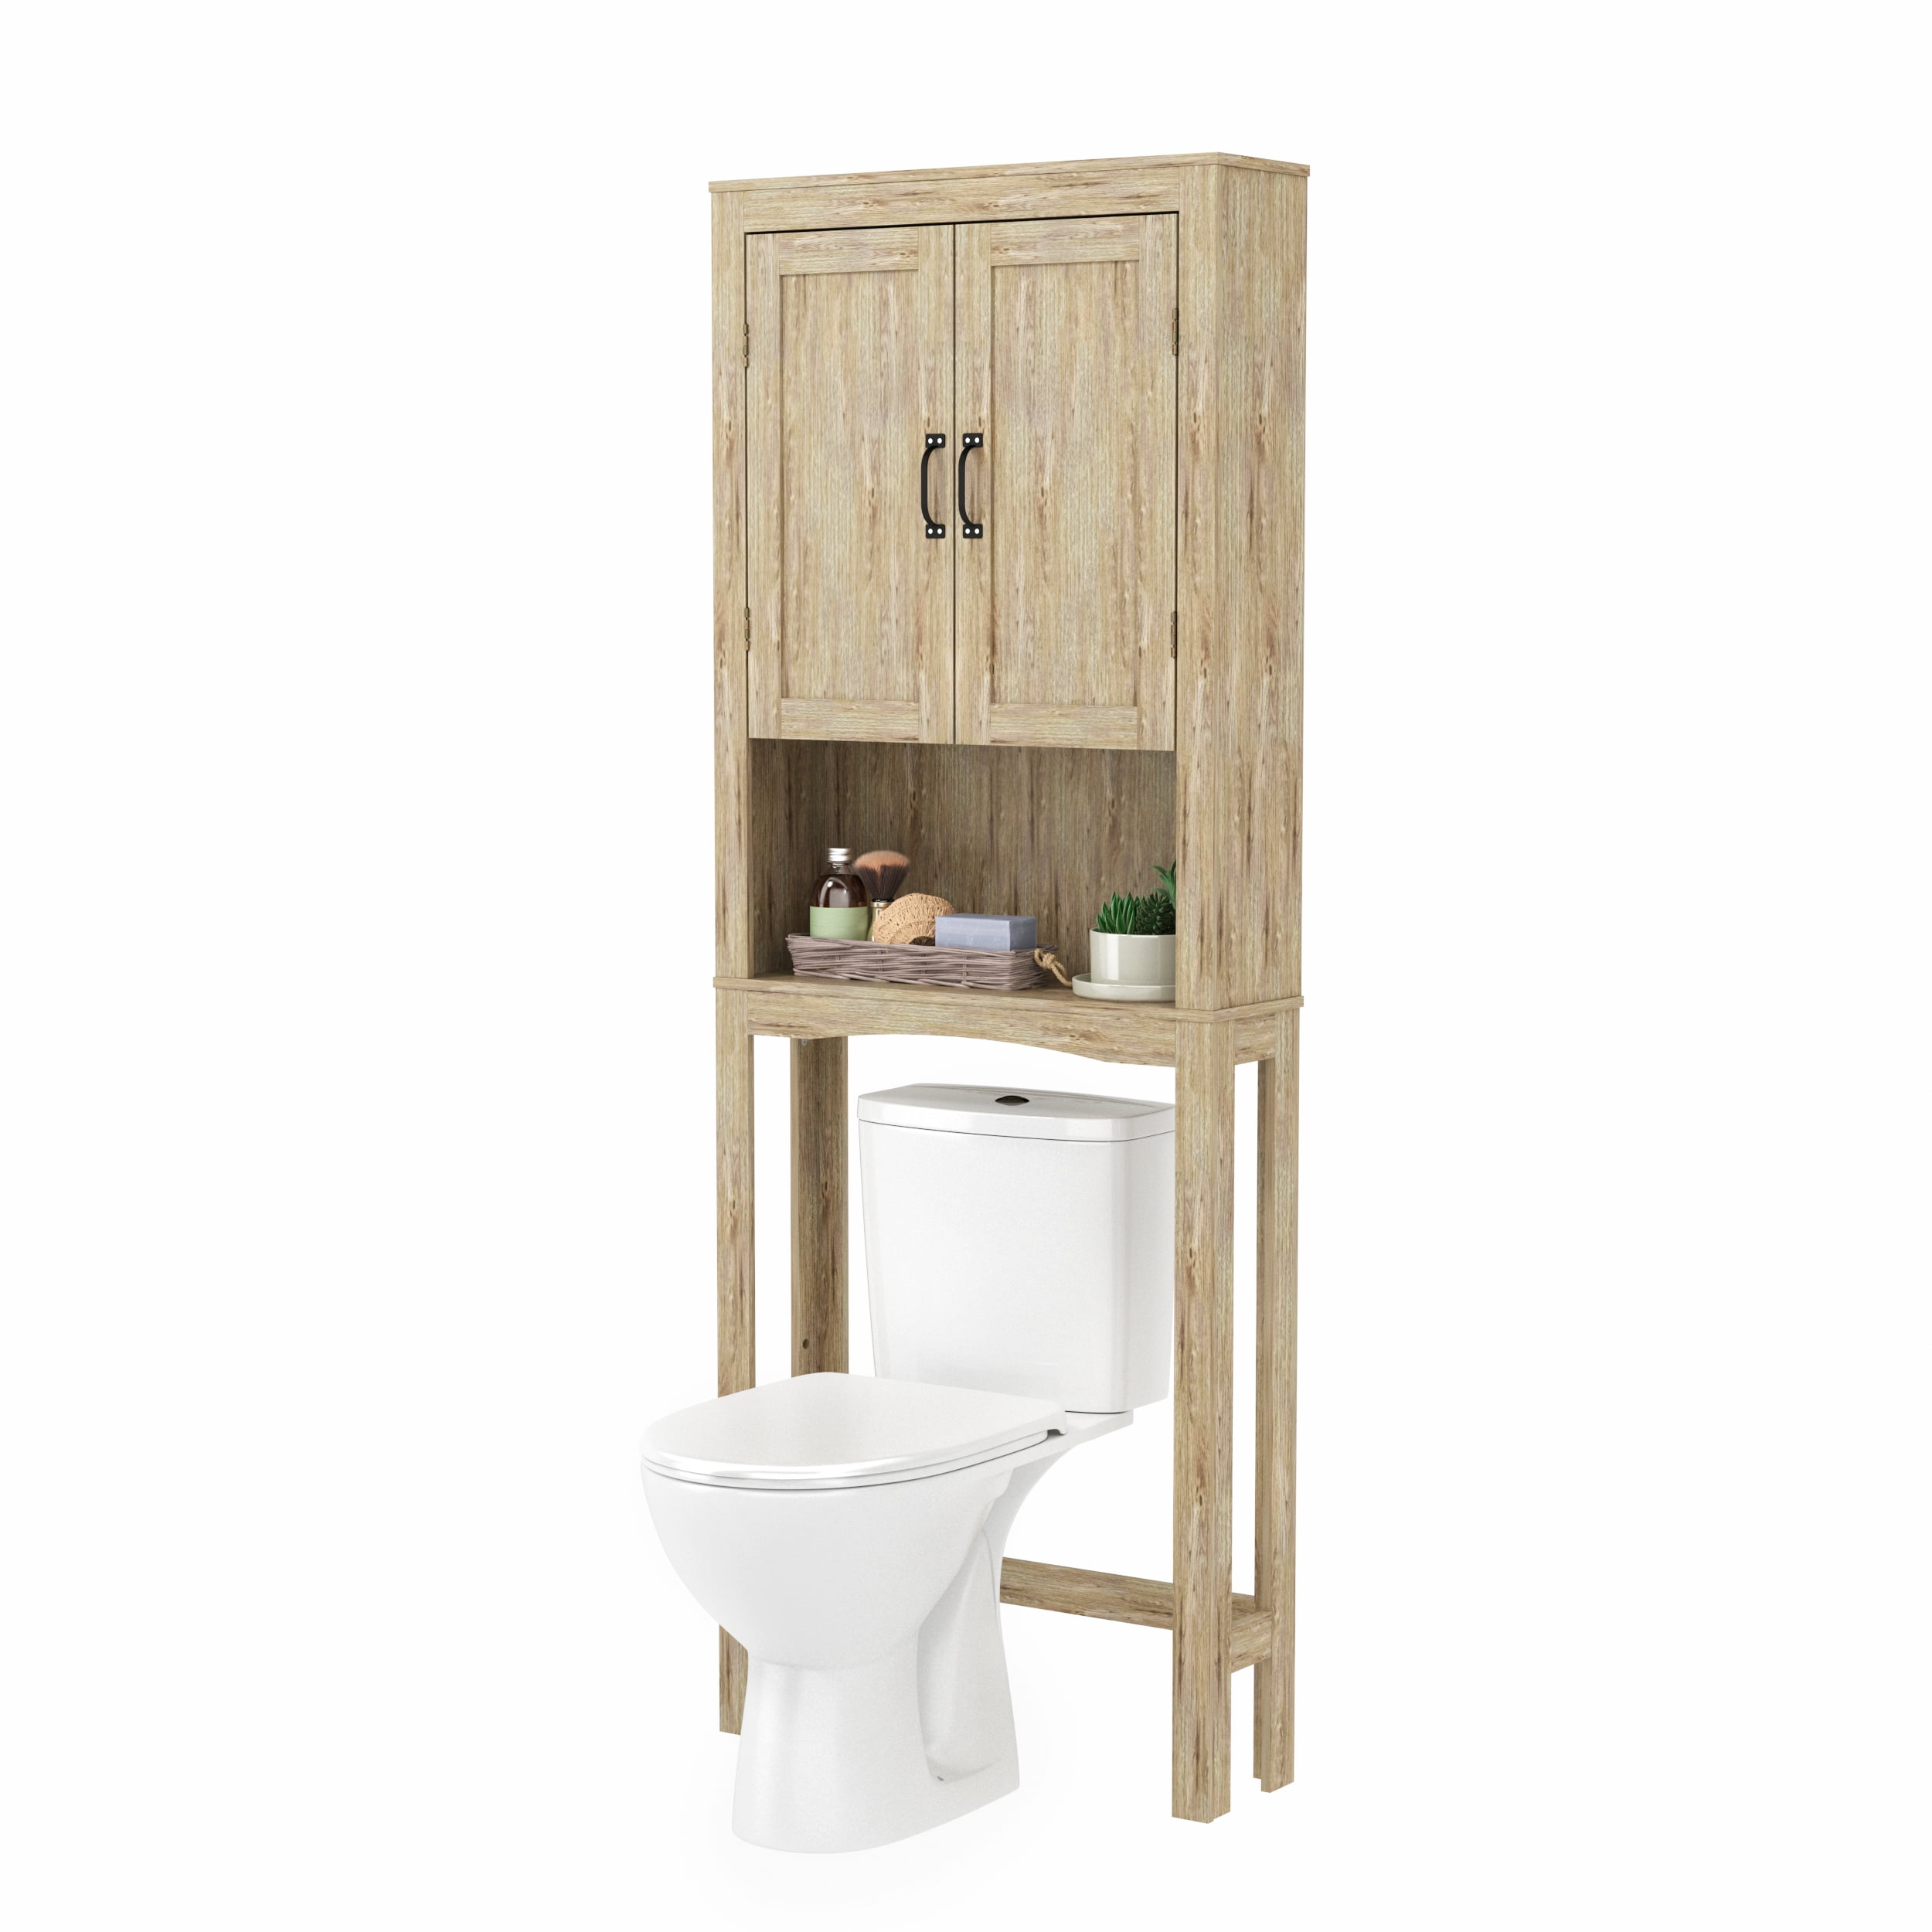 Lxing Over The Toilet Bathroom, Wooden Bathroom Shelves Over Toilet